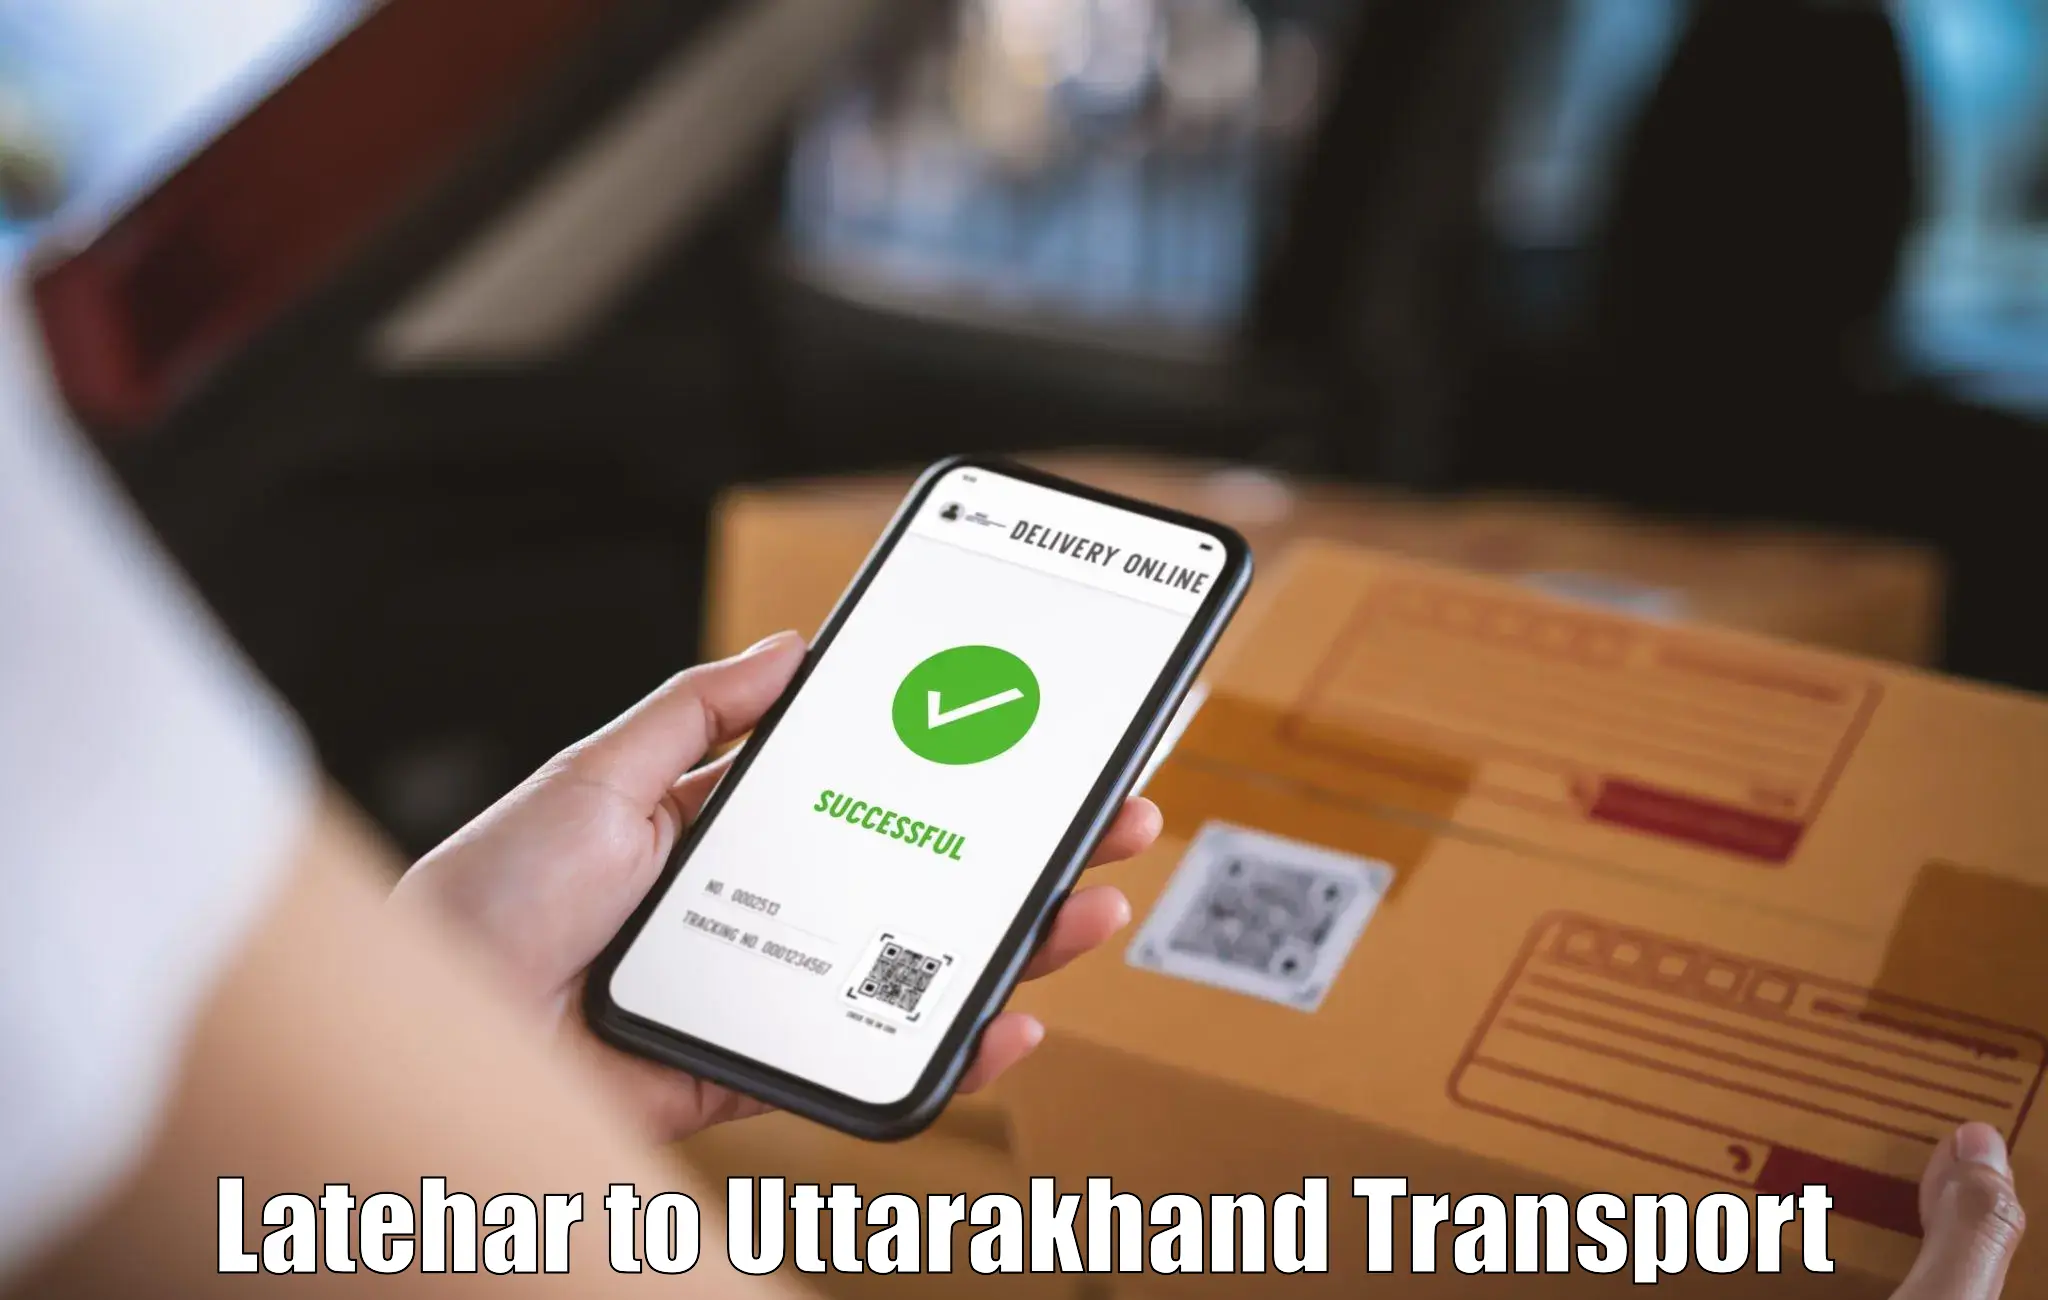 Pick up transport service Latehar to Dehradun